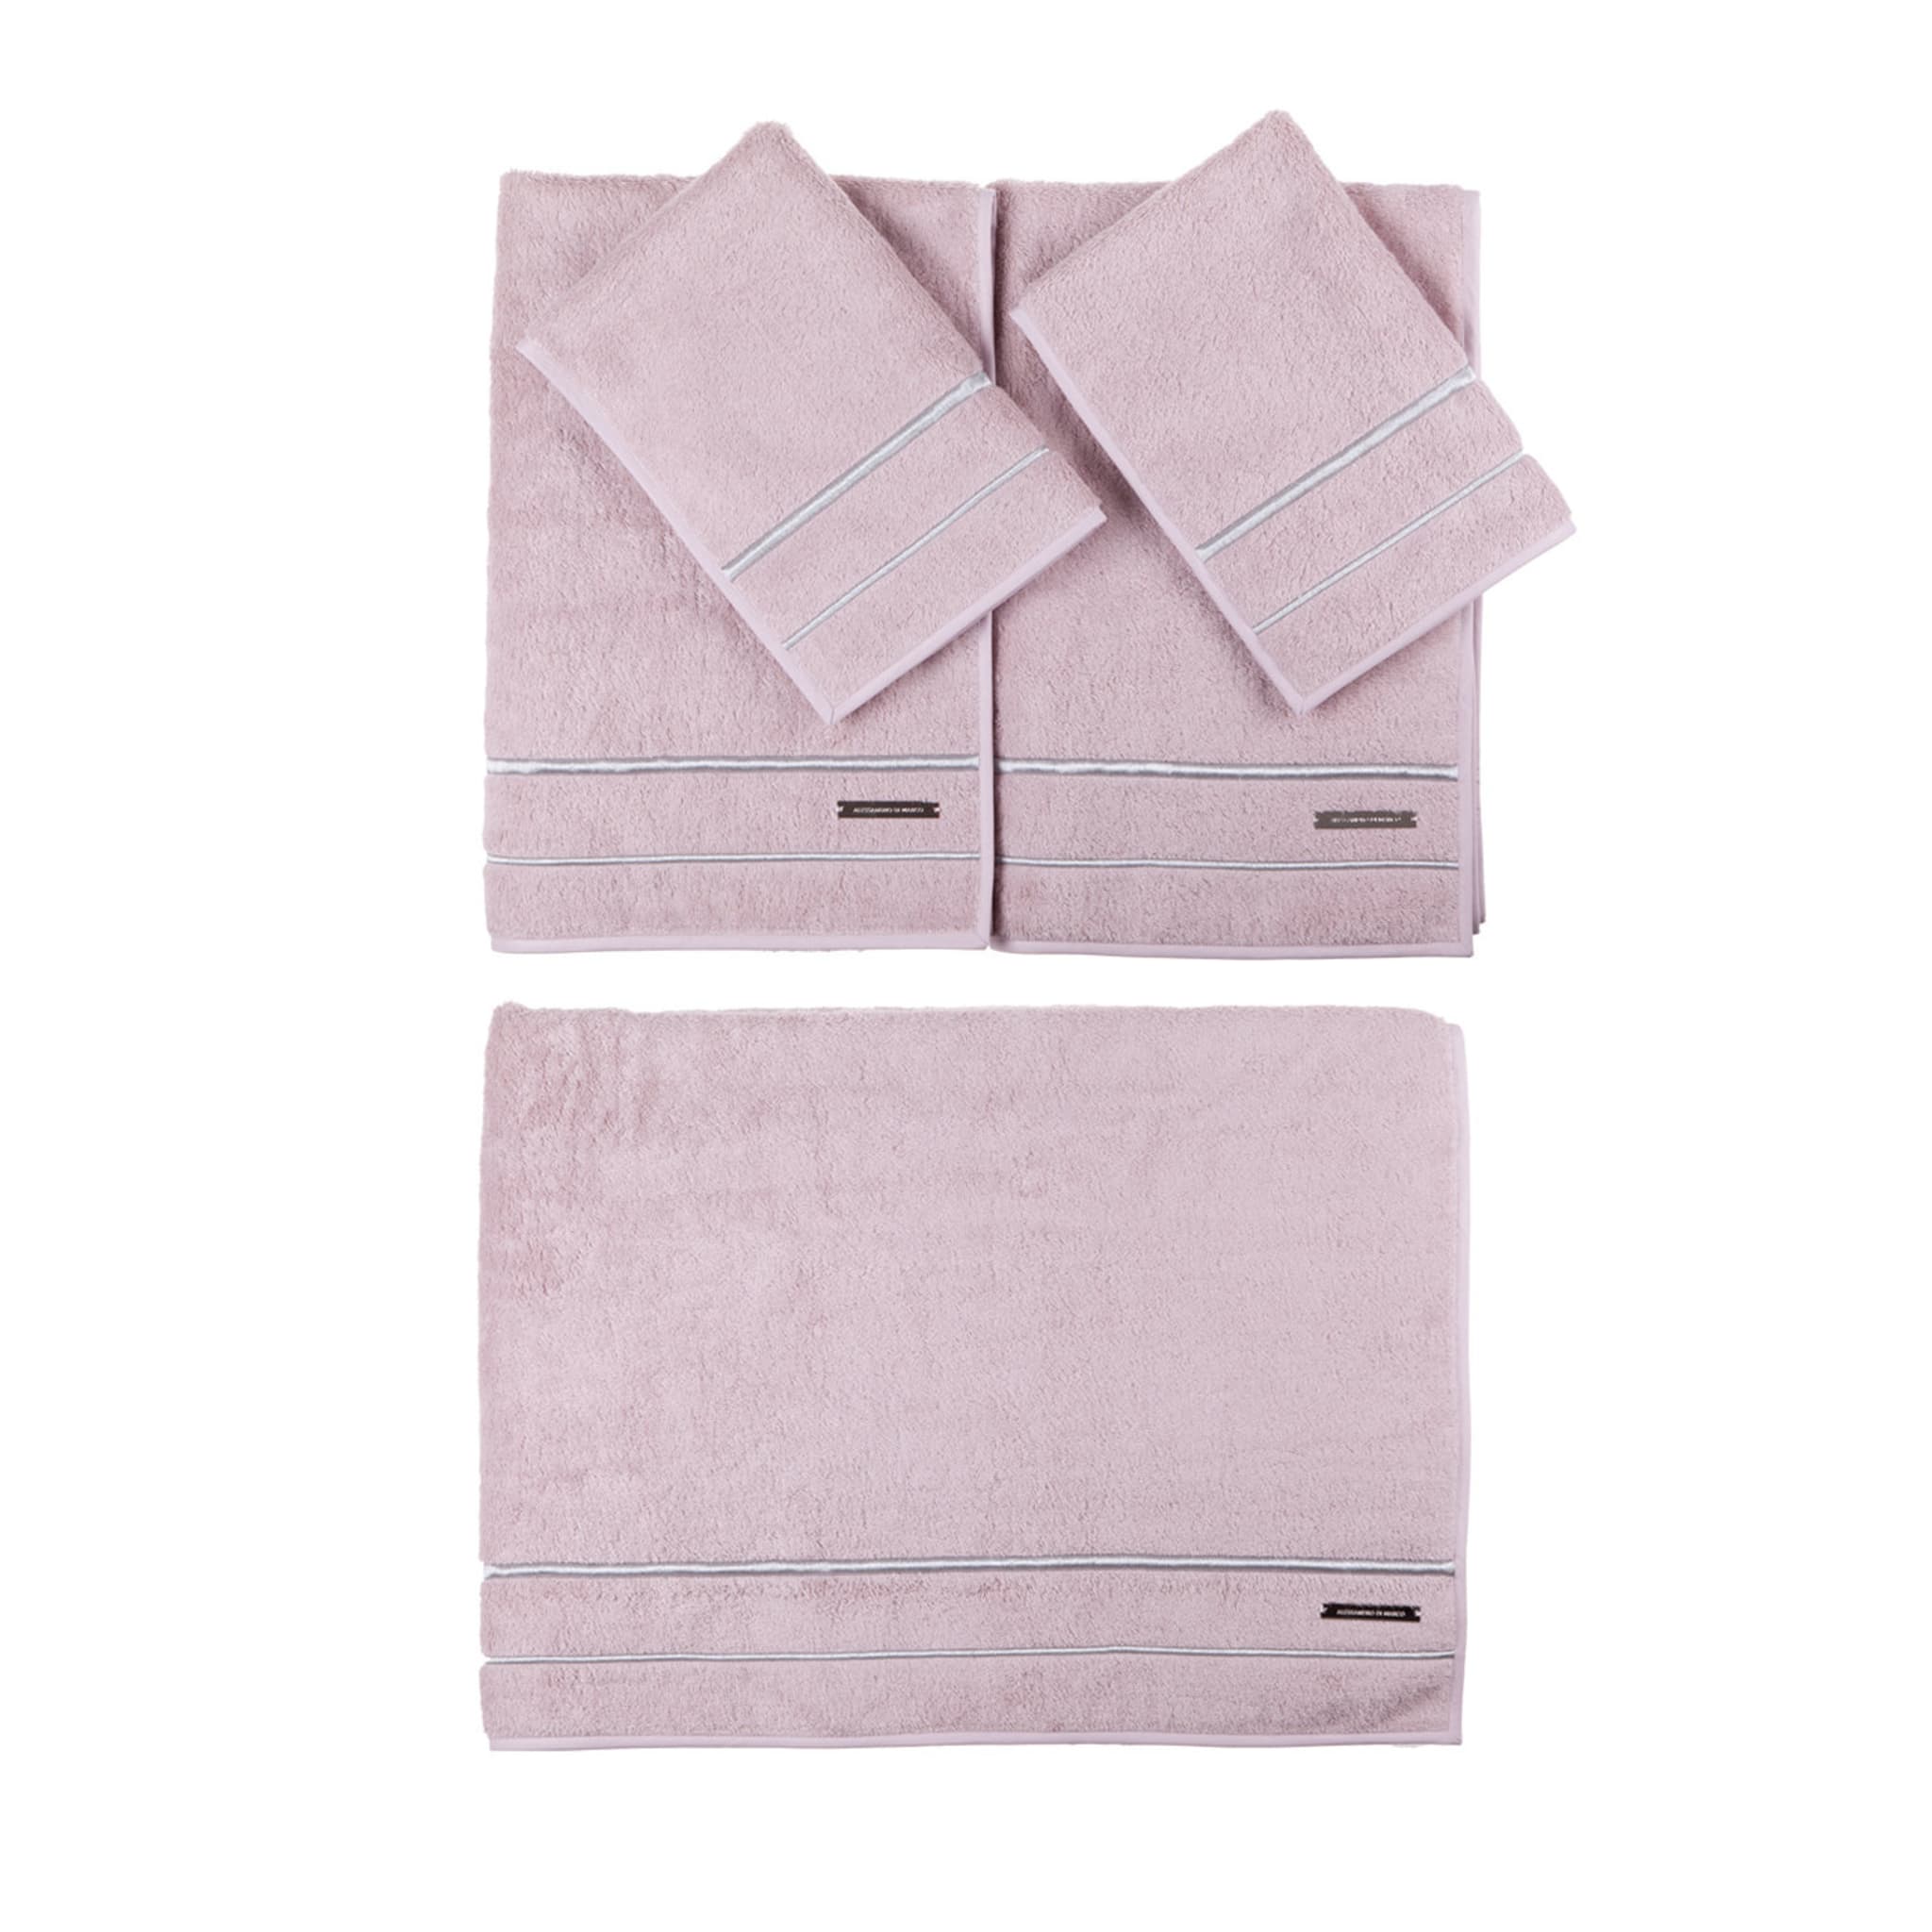 Large Bath Towel Set - Powder Pink - Main view